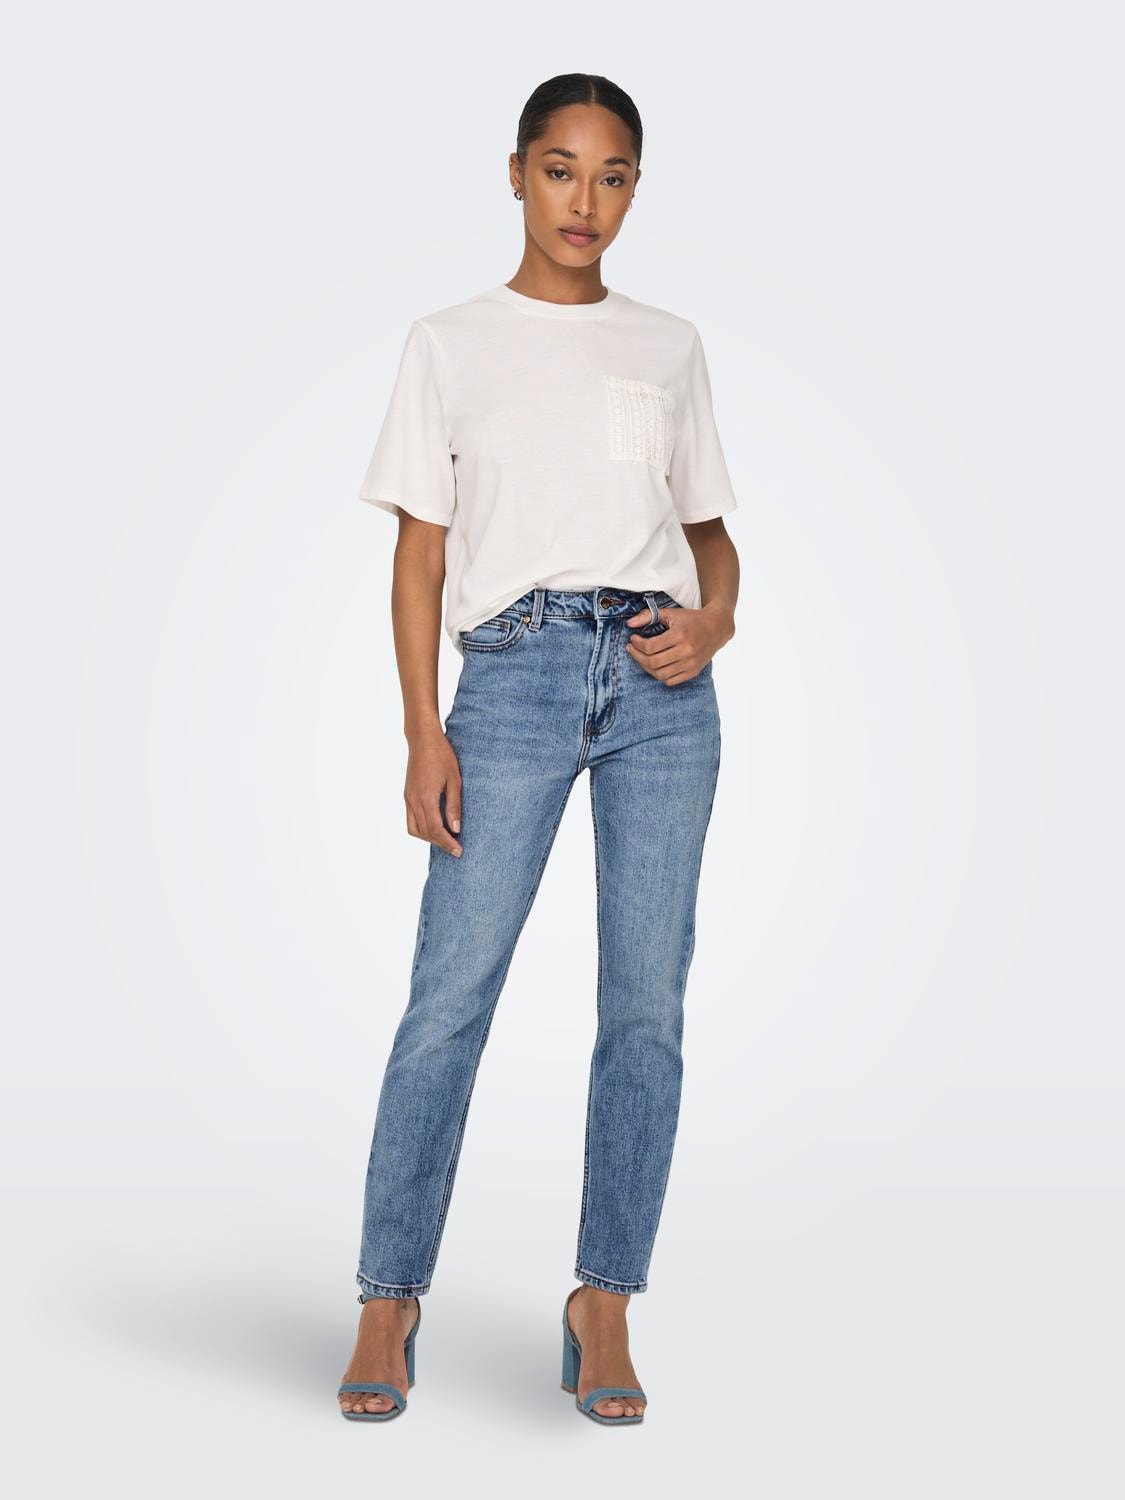 ONLY Straight Fit High waist Jeans -Medium Blue Denim - 15195573